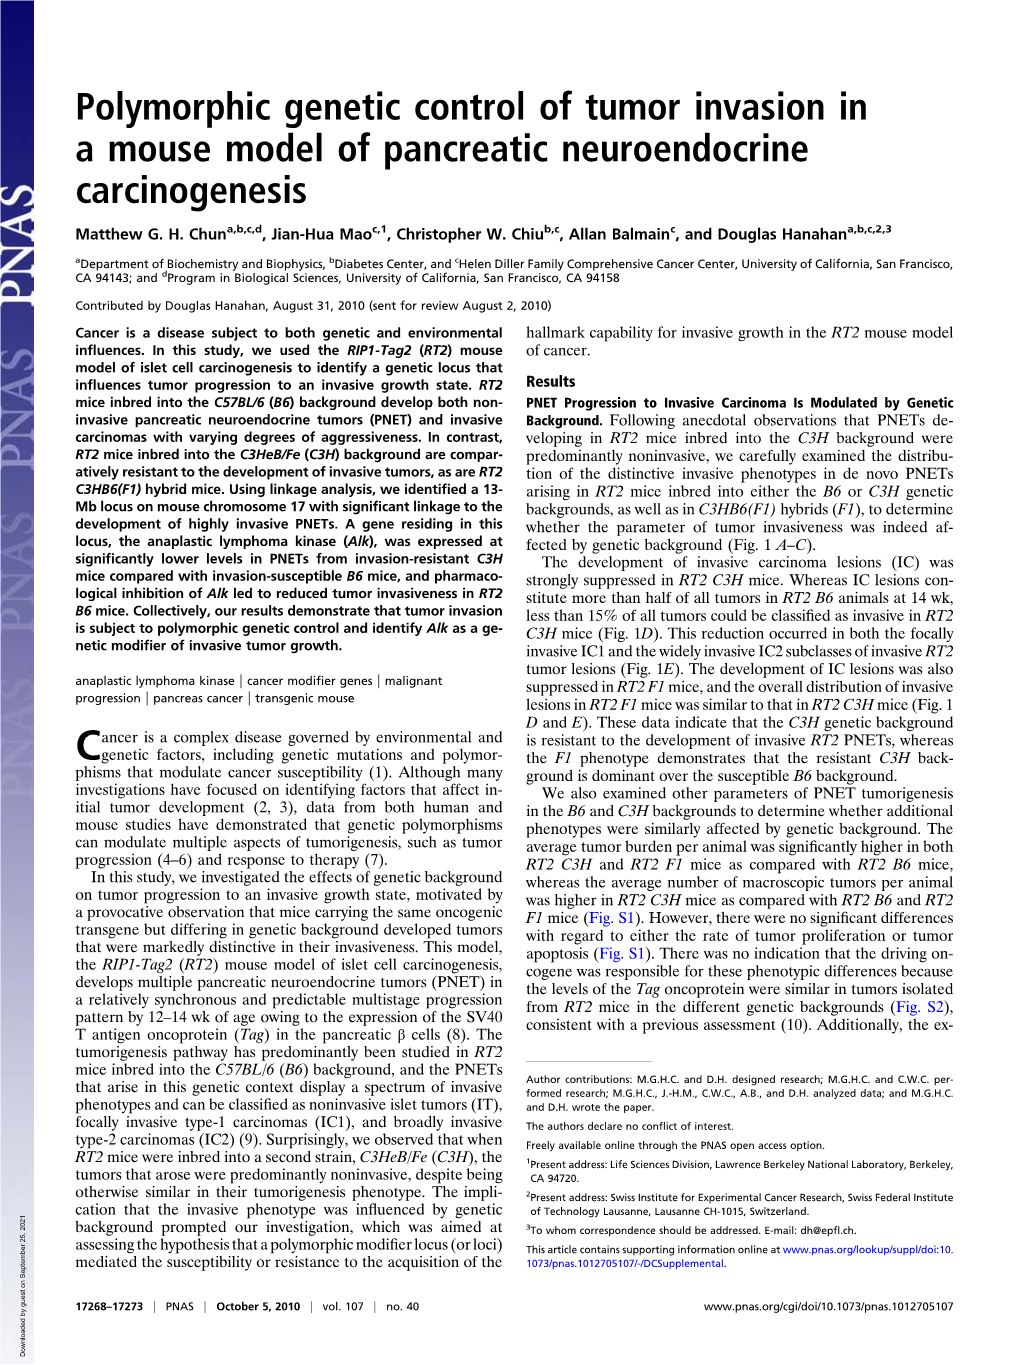 Polymorphic Genetic Control of Tumor Invasion in a Mouse Model of Pancreatic Neuroendocrine Carcinogenesis